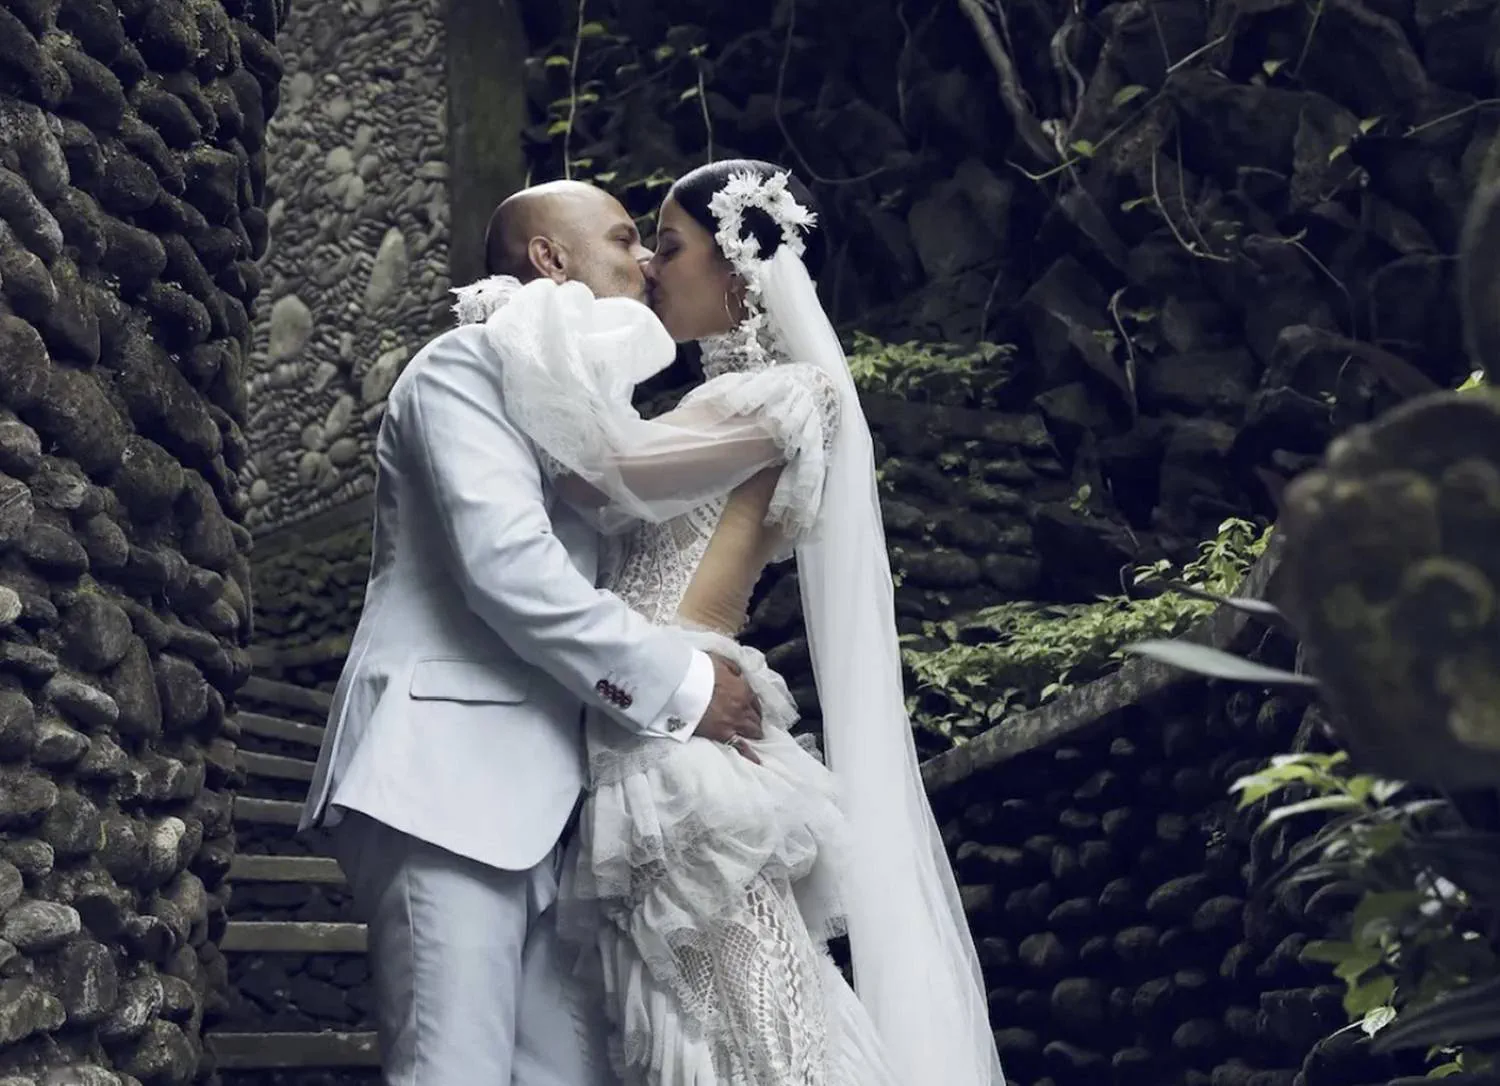 Sweet & Cute Couple Photography, Wedding Photography in Bali